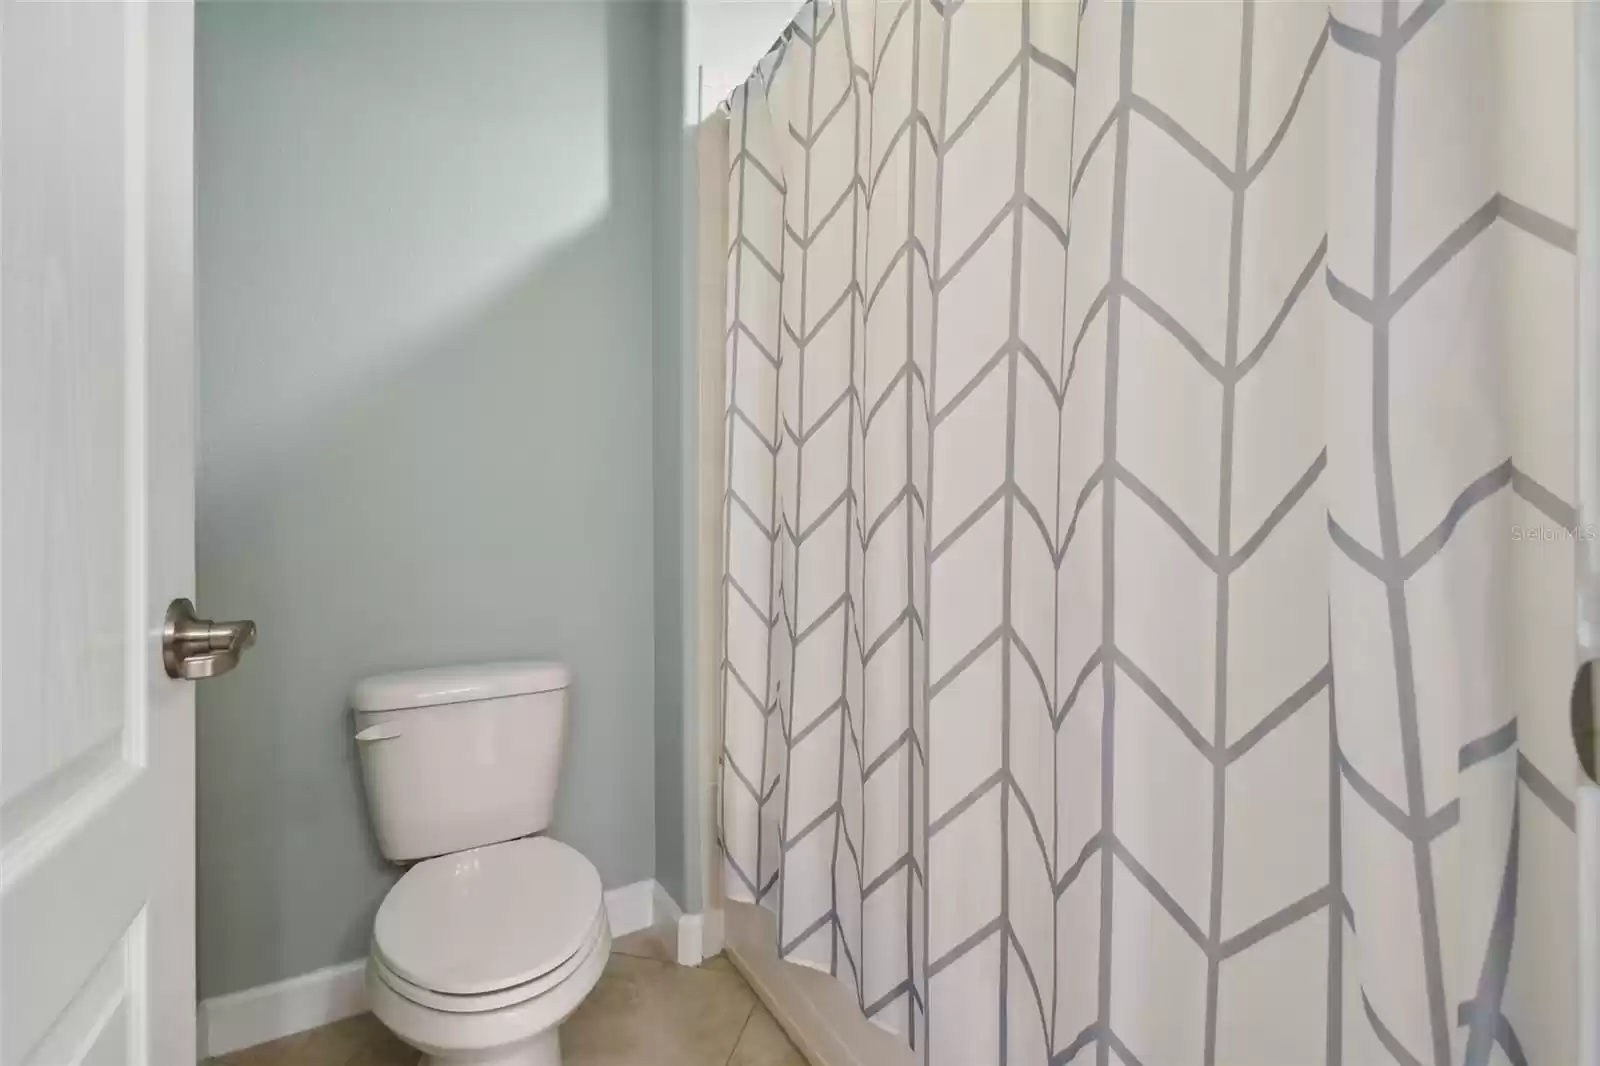 Separate Shower Room